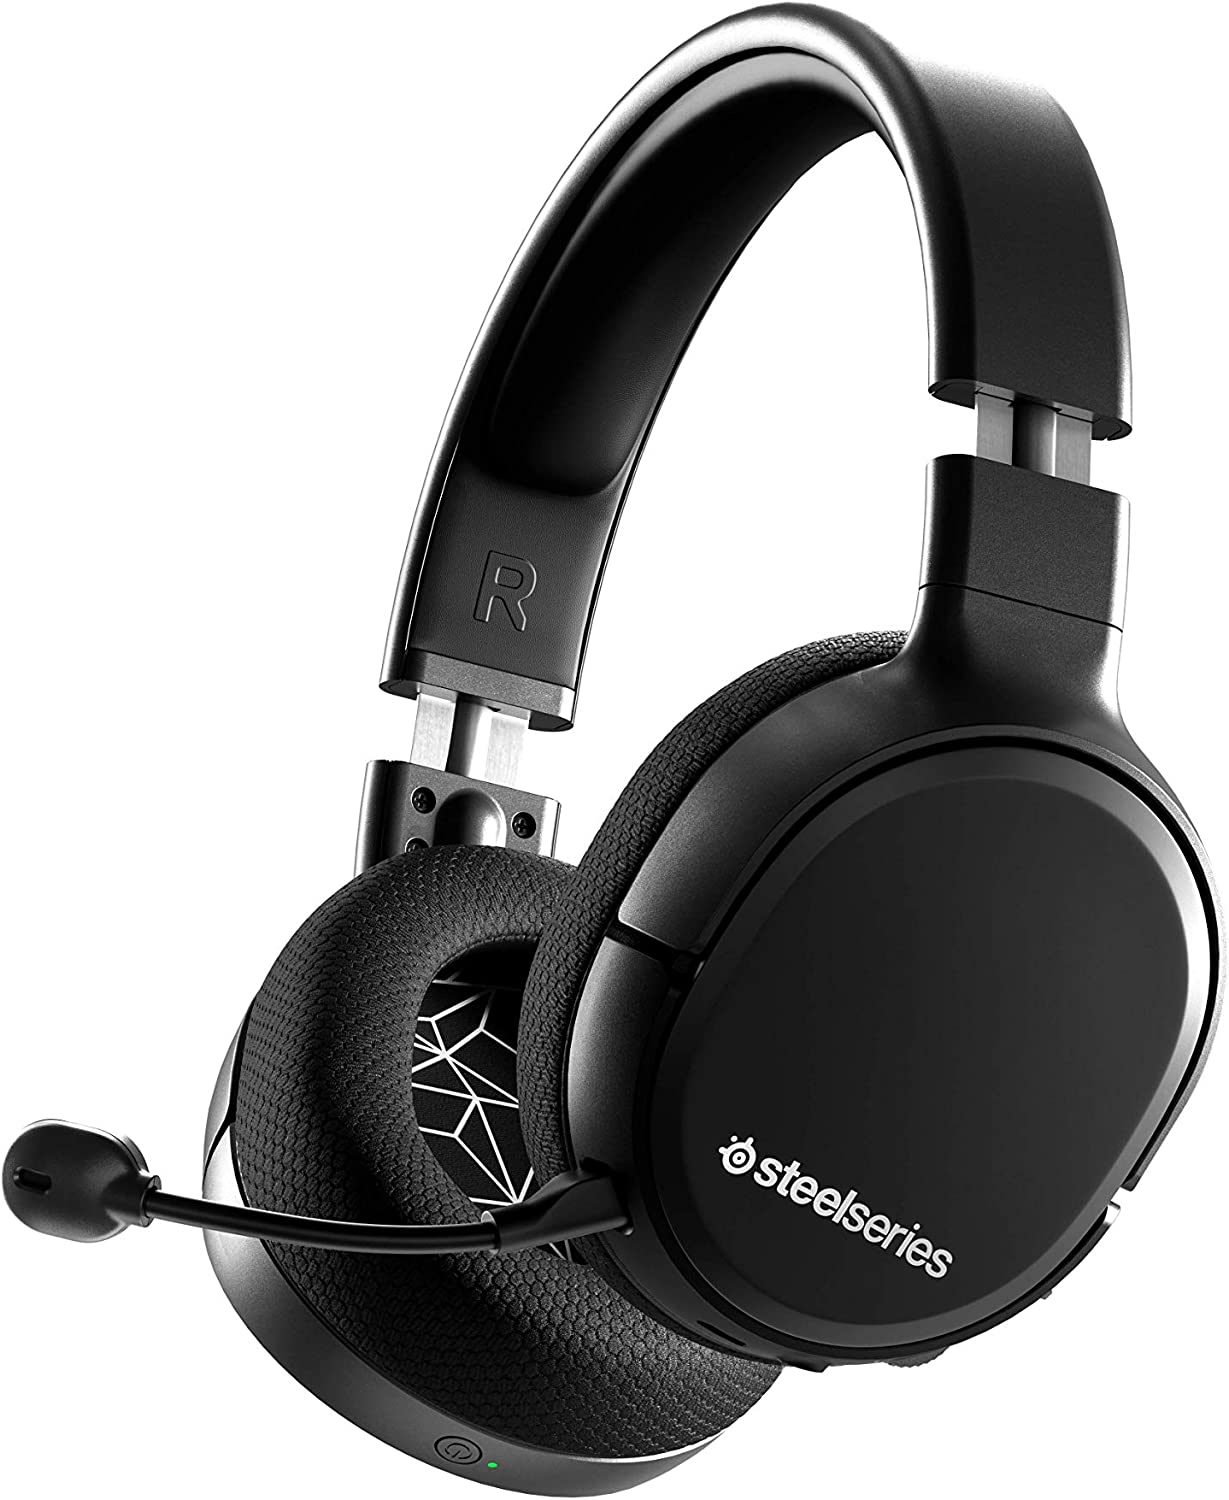 SteelSeries Arctis 1 Wireless Gaming Headset (Black) $49 + Free Shipping